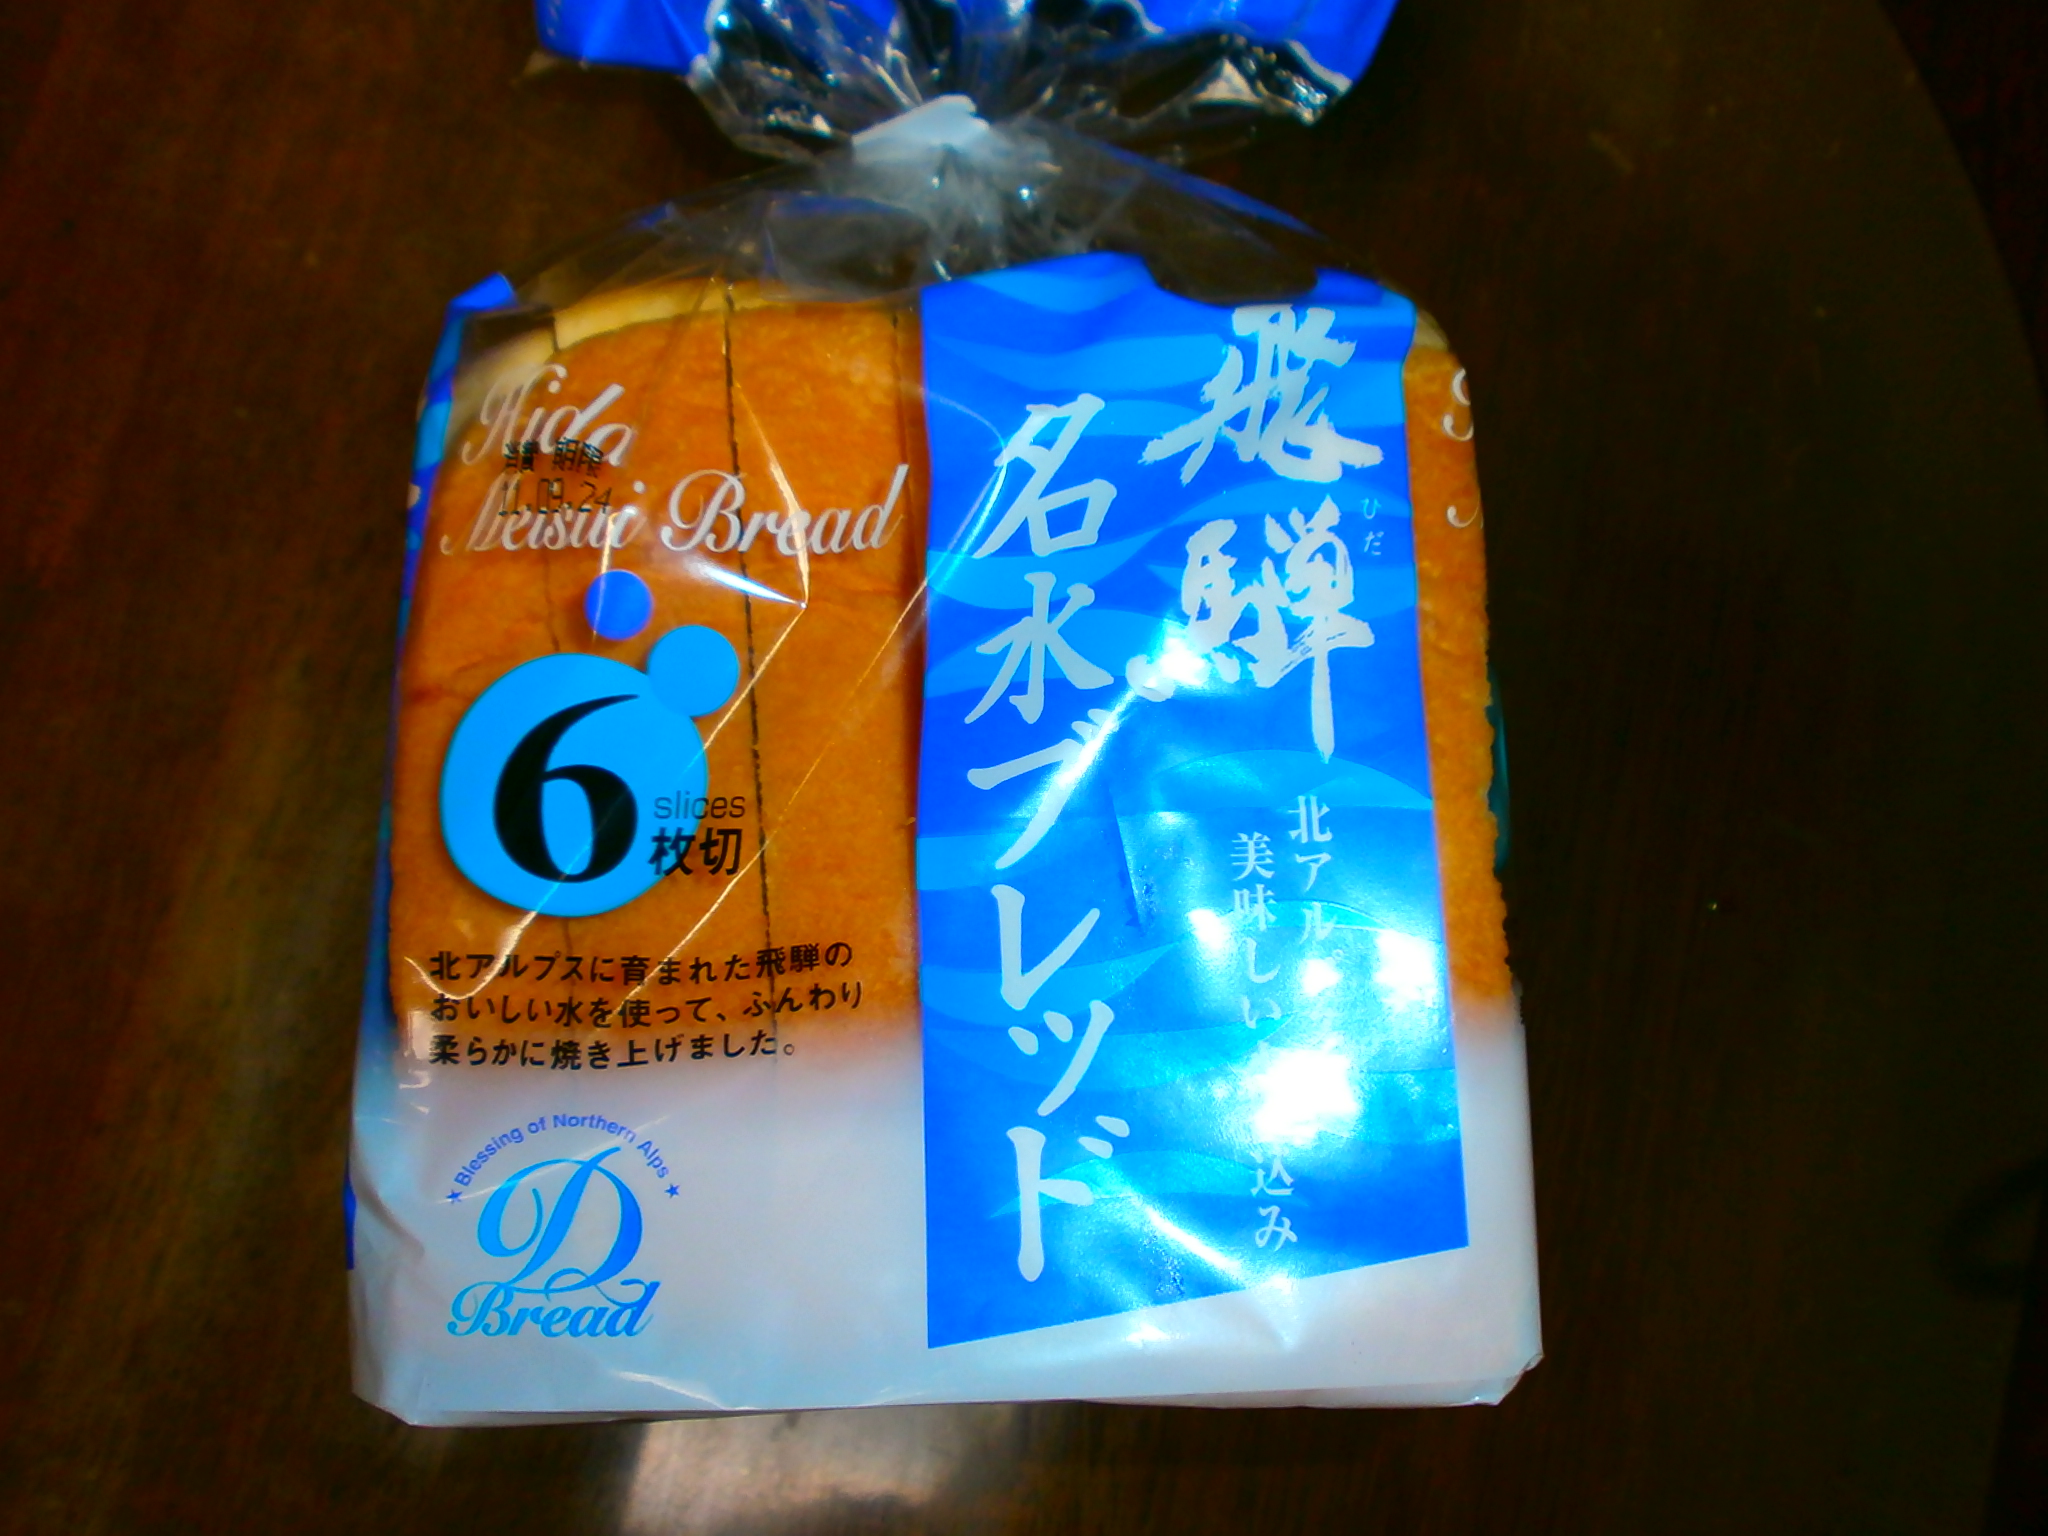 Six bread